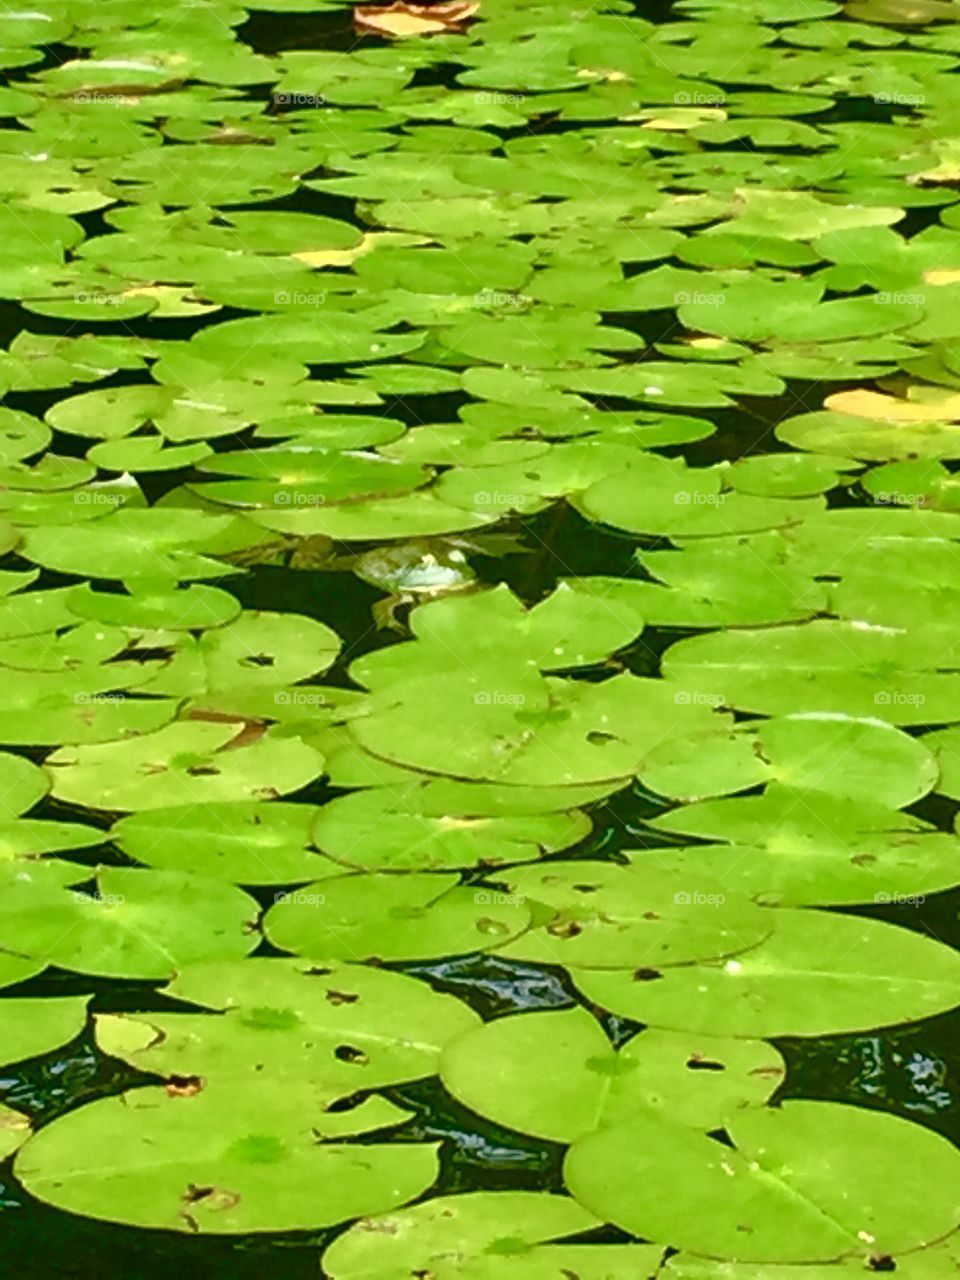 Frog lily pad pond